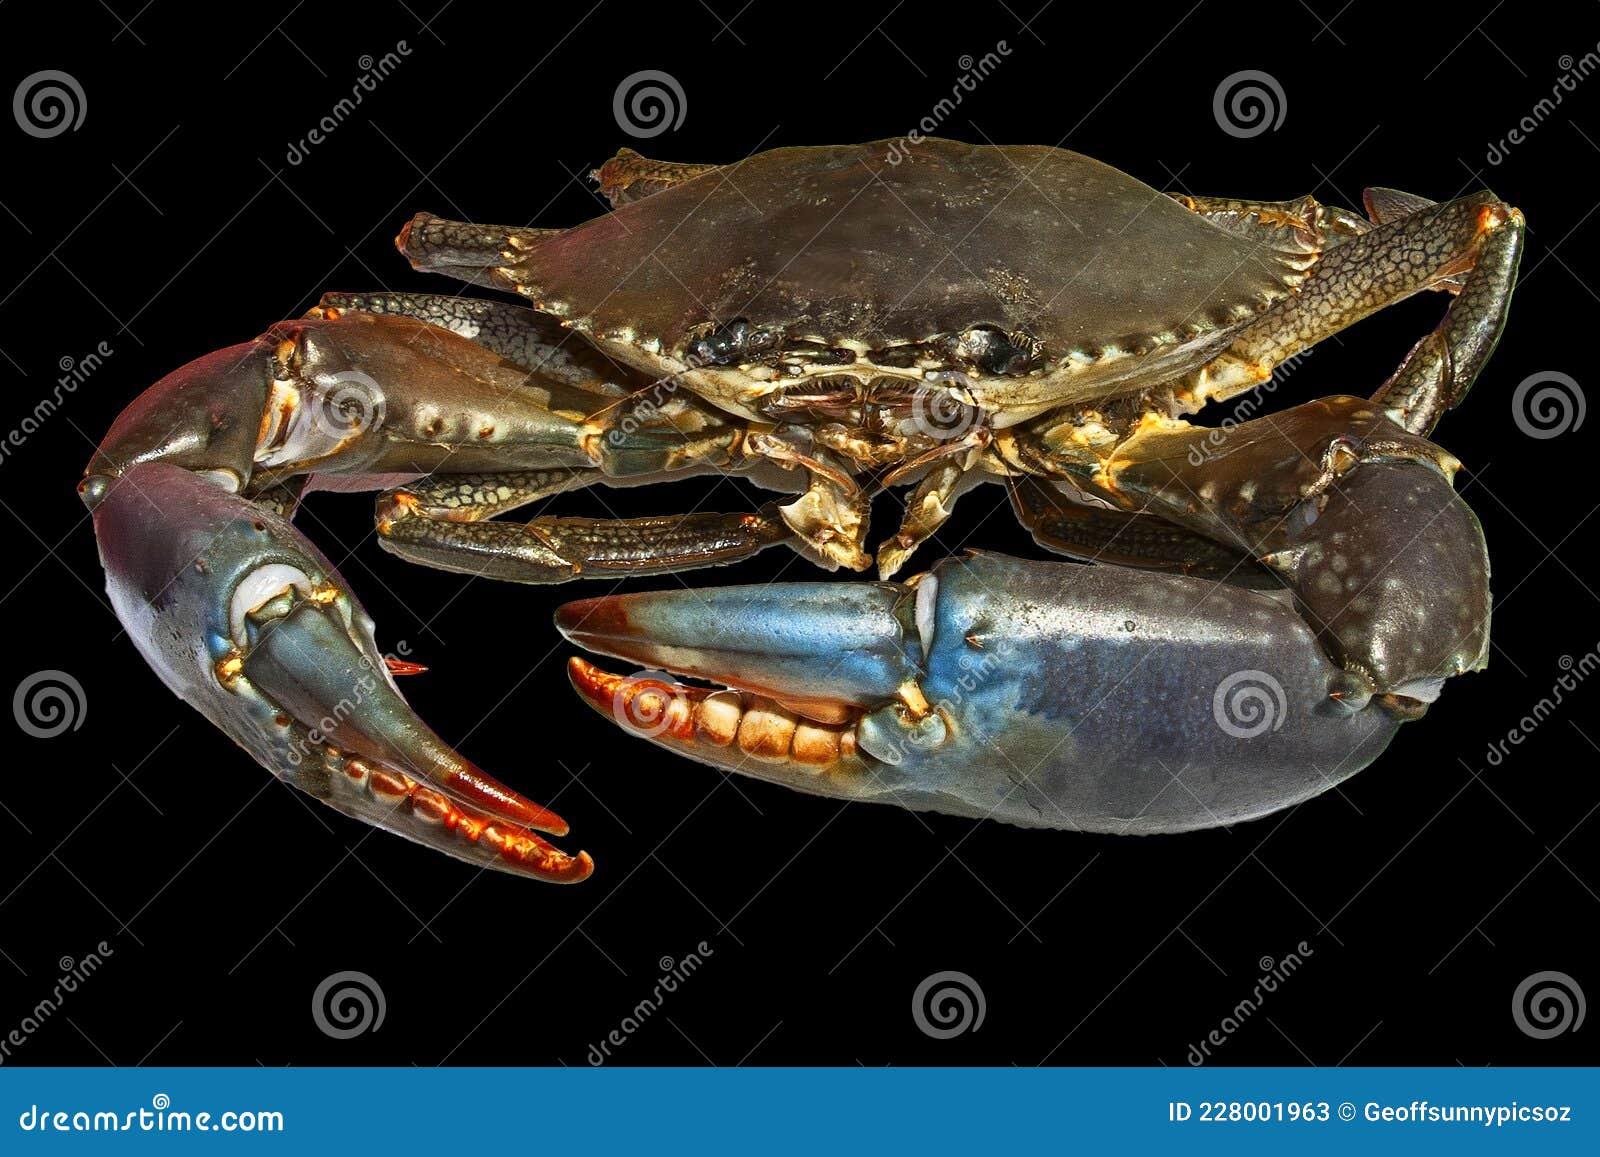 Australian Mud Crab Photos - Free & Royalty-Free Photos from